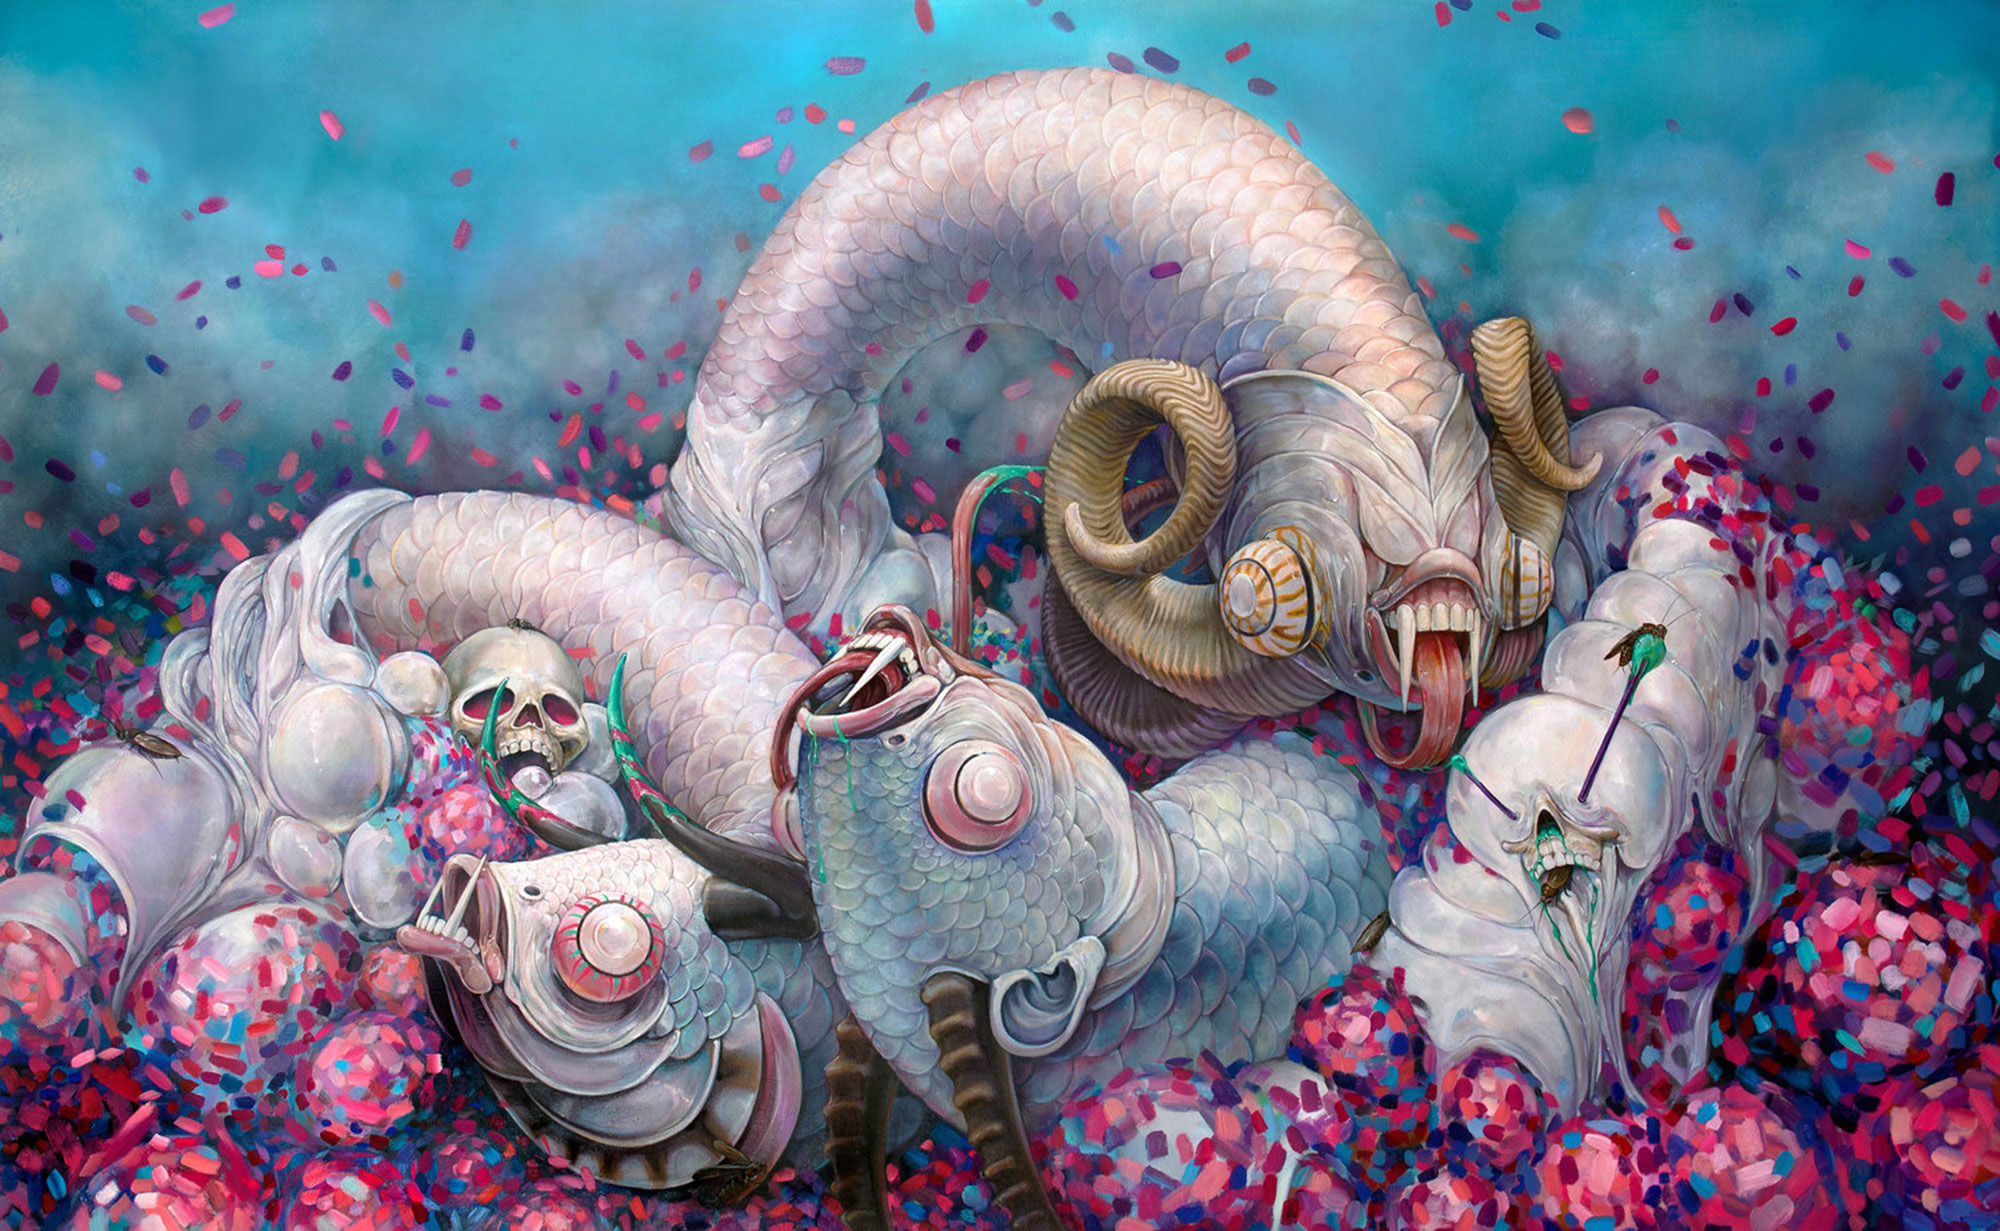 Hannah Faith Yata - Polymorphous (Furies) - oil painting of twisting serpent hybrid creatures